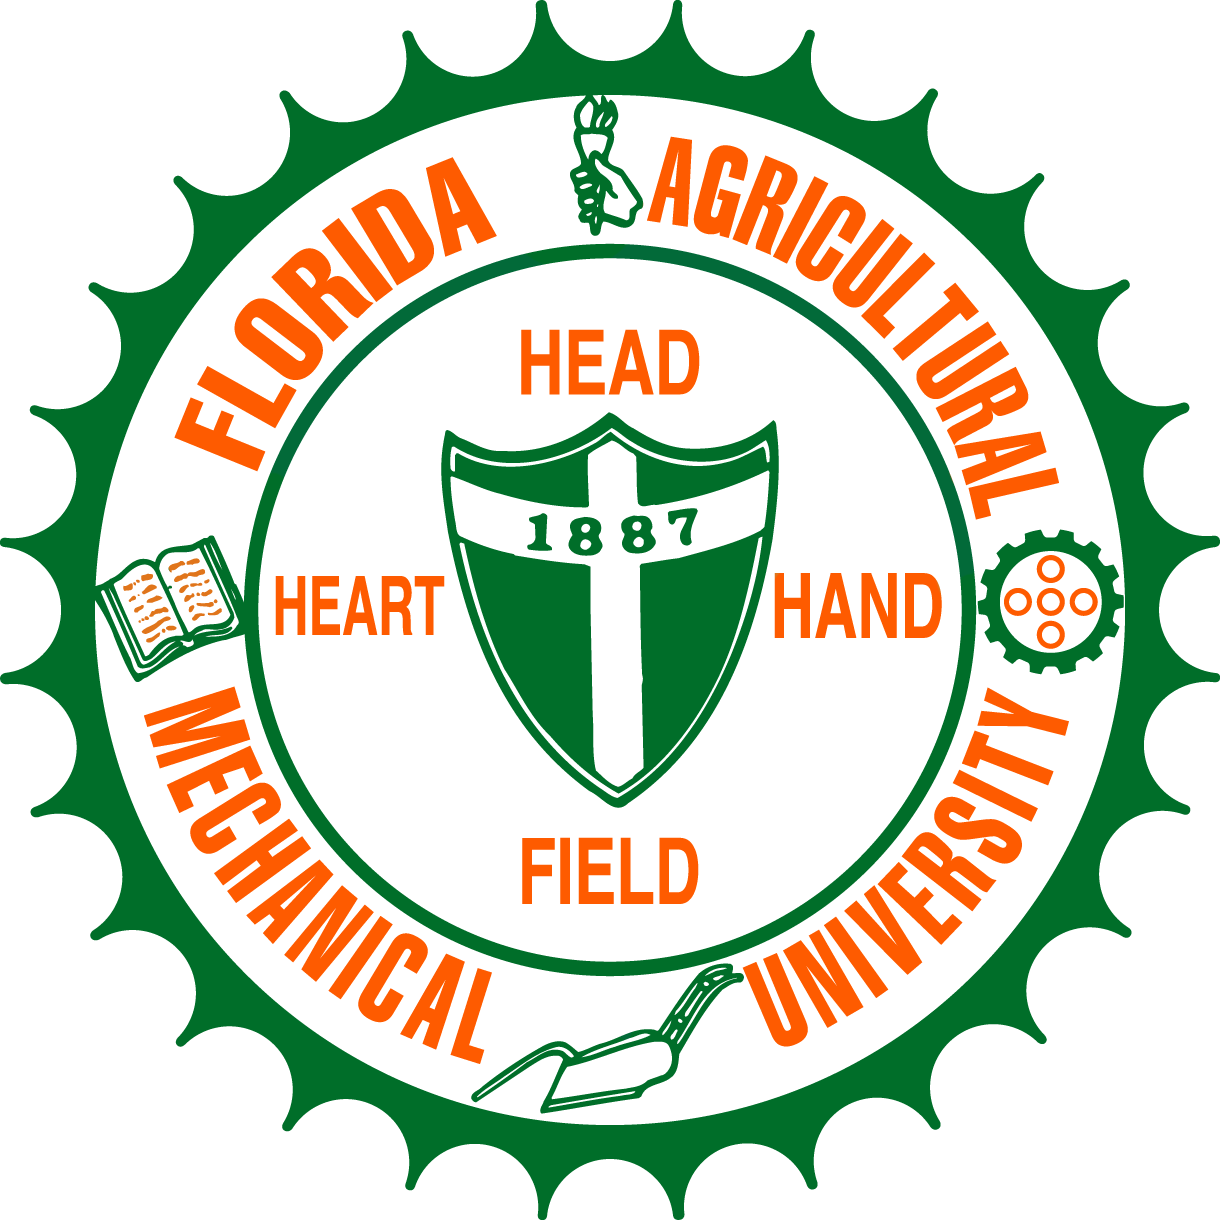 FAMU Board of Trustees Committee Meeting @ Grand Ballroom | Tallahassee | Florida | United States